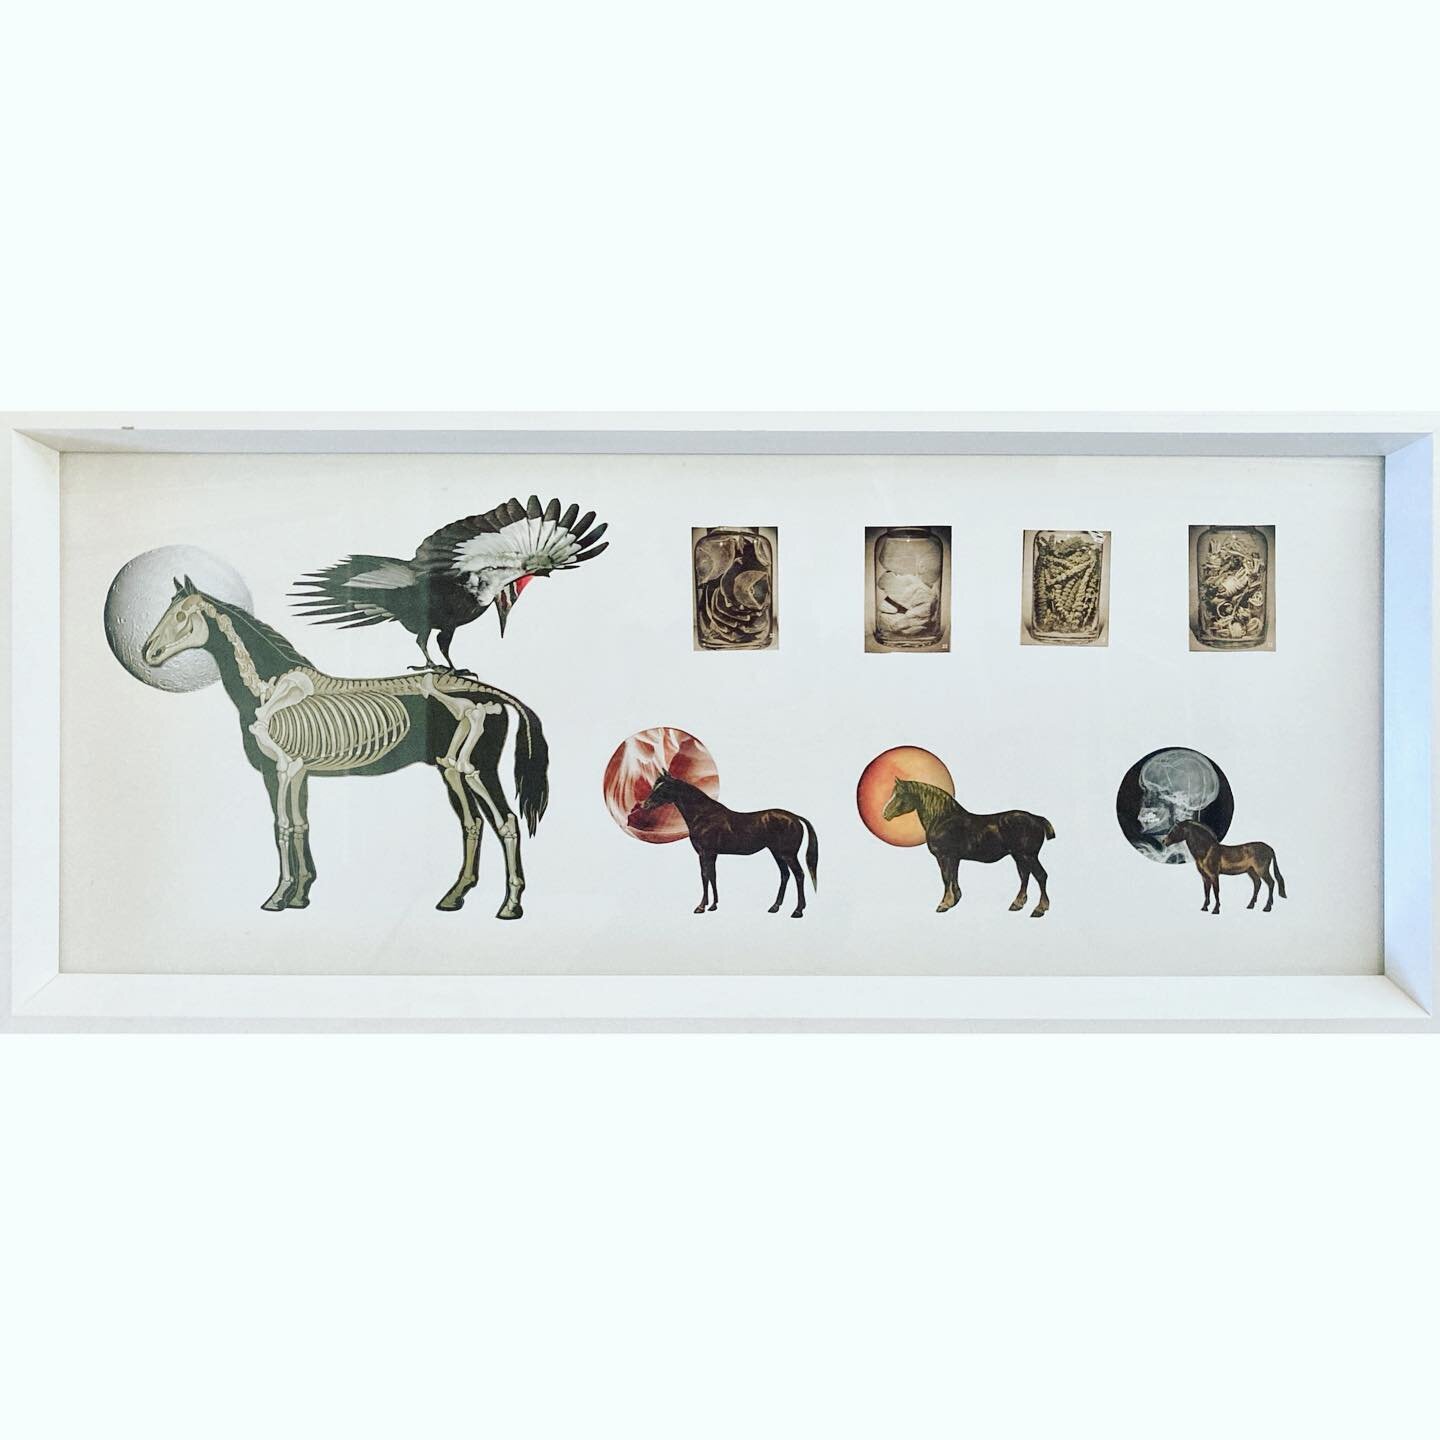 Here&rsquo;s an analog for ya. 12.5&rdquo;x28.5&rdquo; framed 🐴 

#collage #horse #anatomical #woodpecker #bird #artistsoninstagram